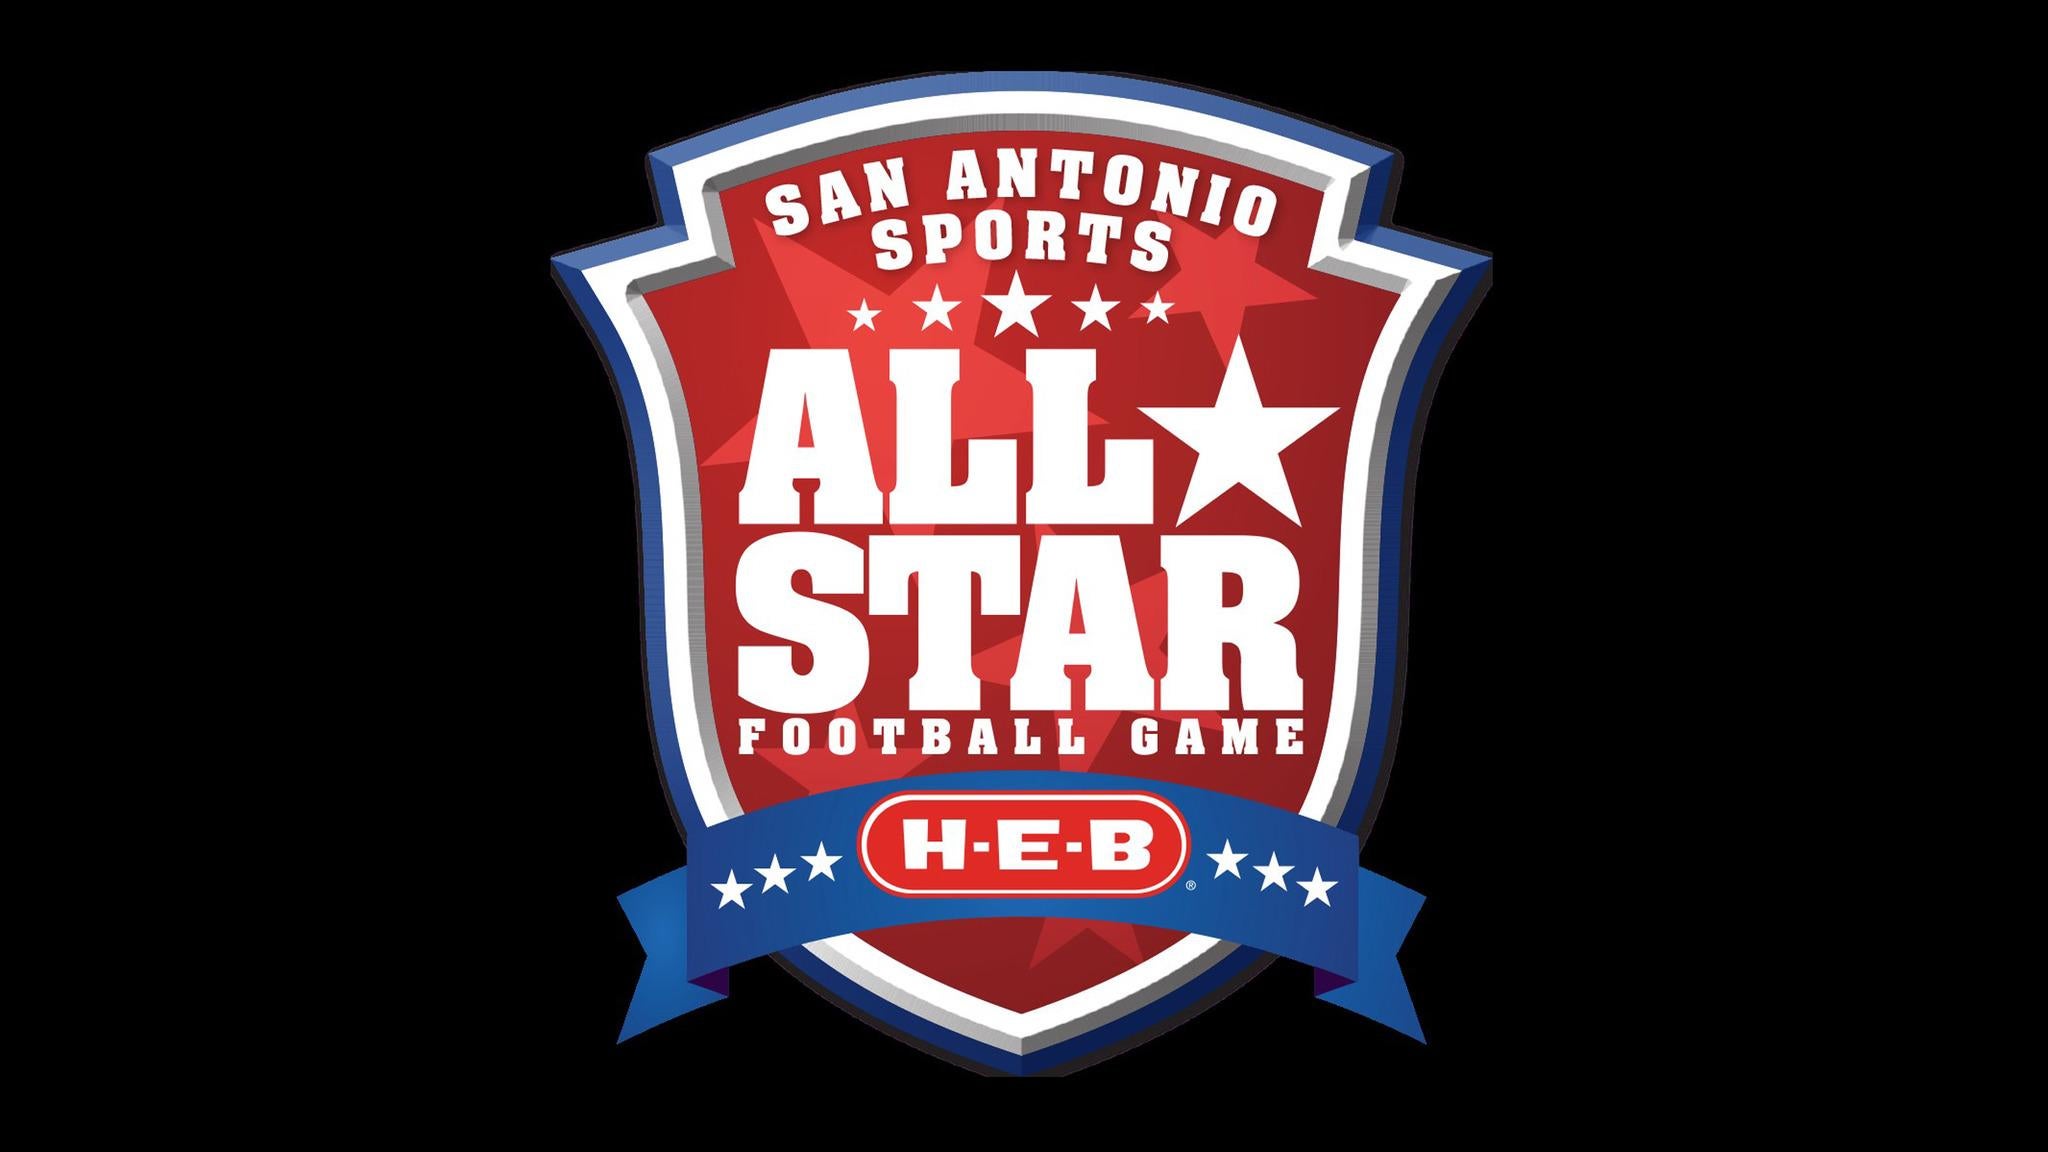 San Antonio Sports AllStar Football Game Billets Billets de match